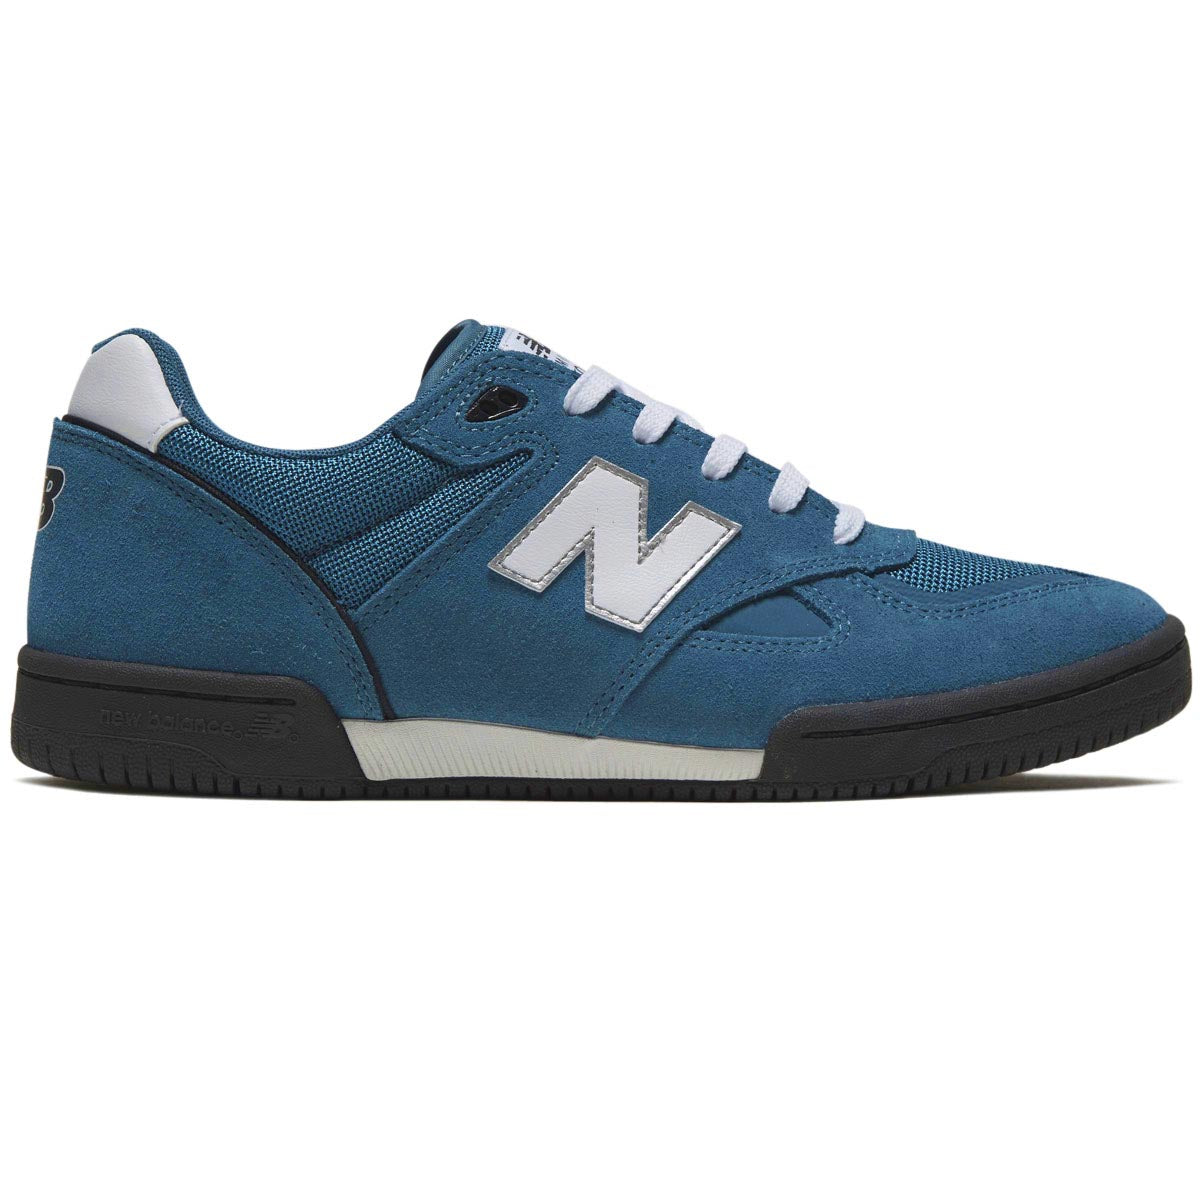 New Balance 600 Tom Knox Shoes - Elemental Blue/Black image 1